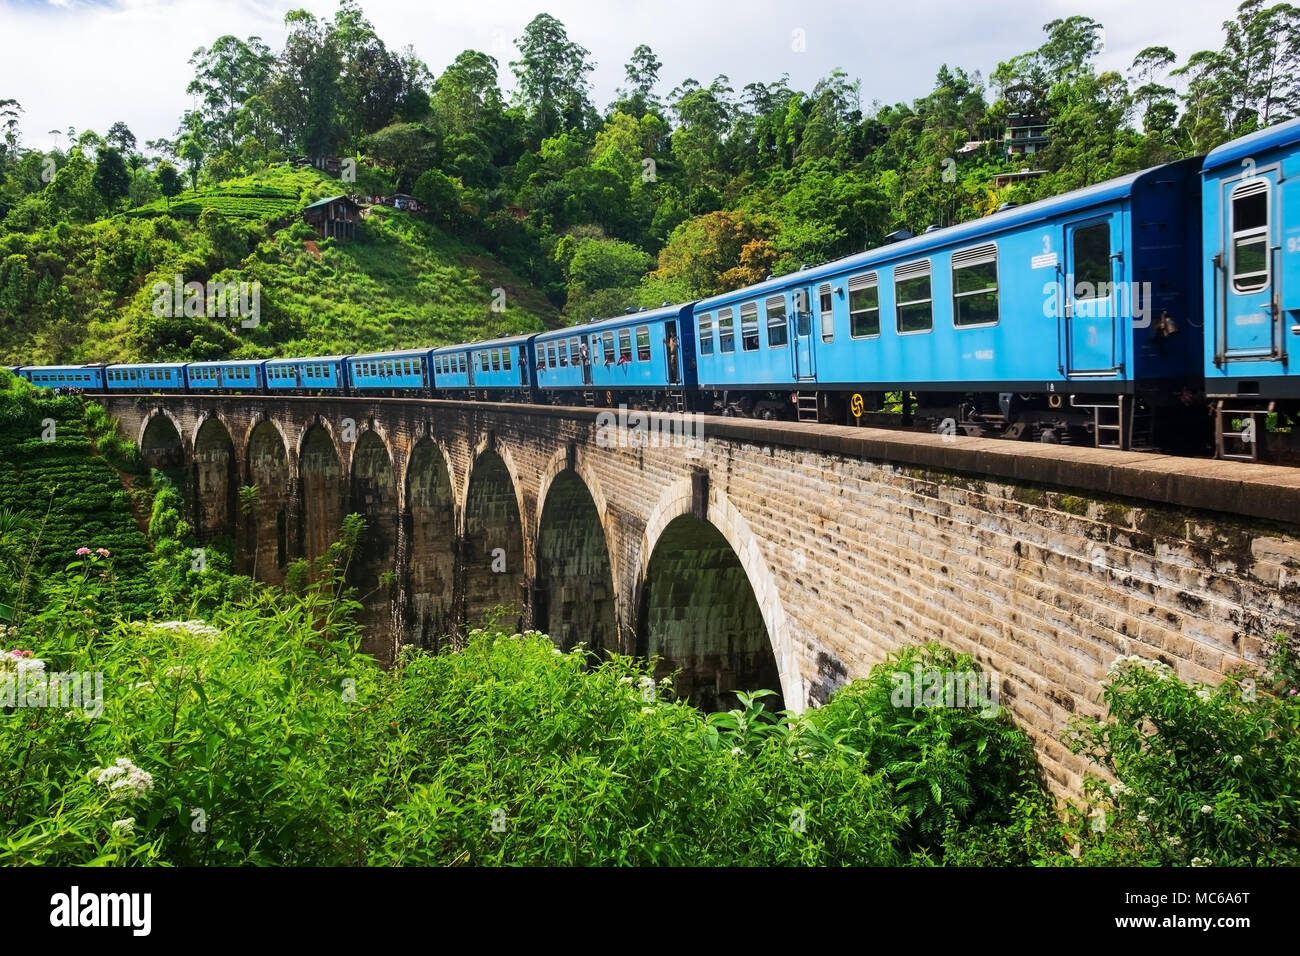 Ella Sri Lanka, April 08 2018: Zug auf der Neun Bogenbrücke in Ella Stockfoto